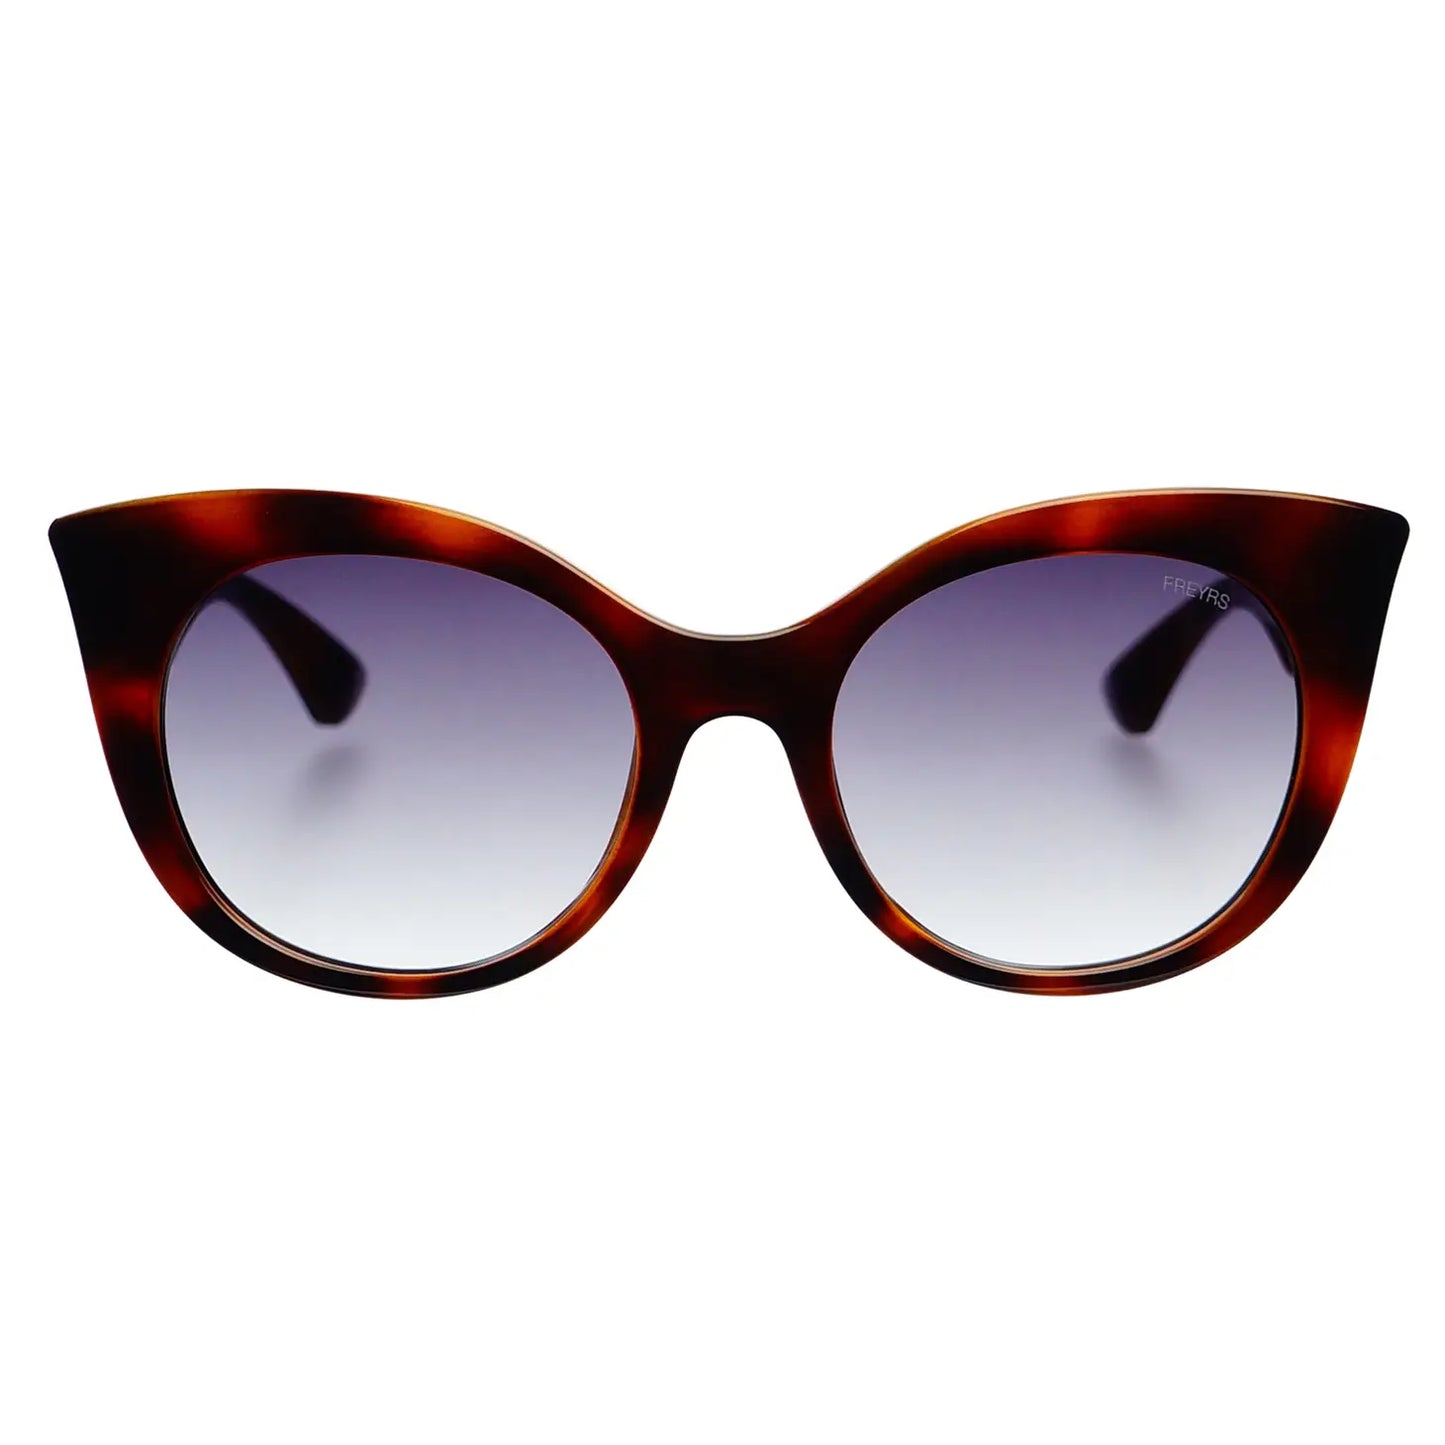 Roxy Sunglasses - Tortoise